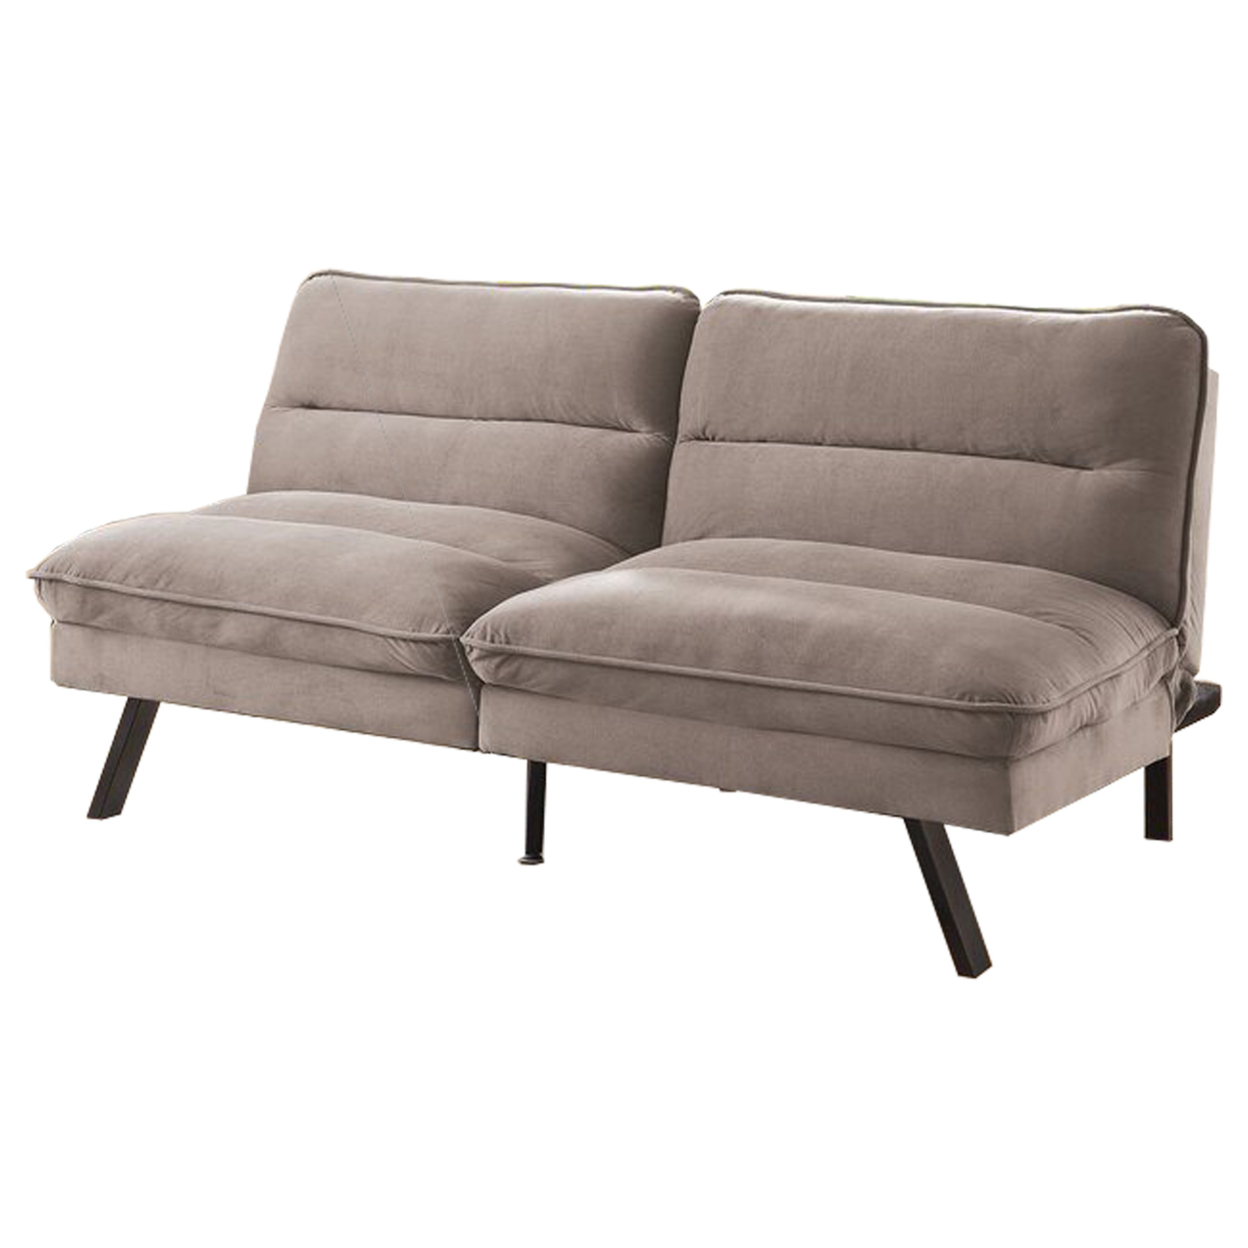 Fabric Futon Sofa With Split Back And Angled Legs, Gray- Saltoro Sherpi